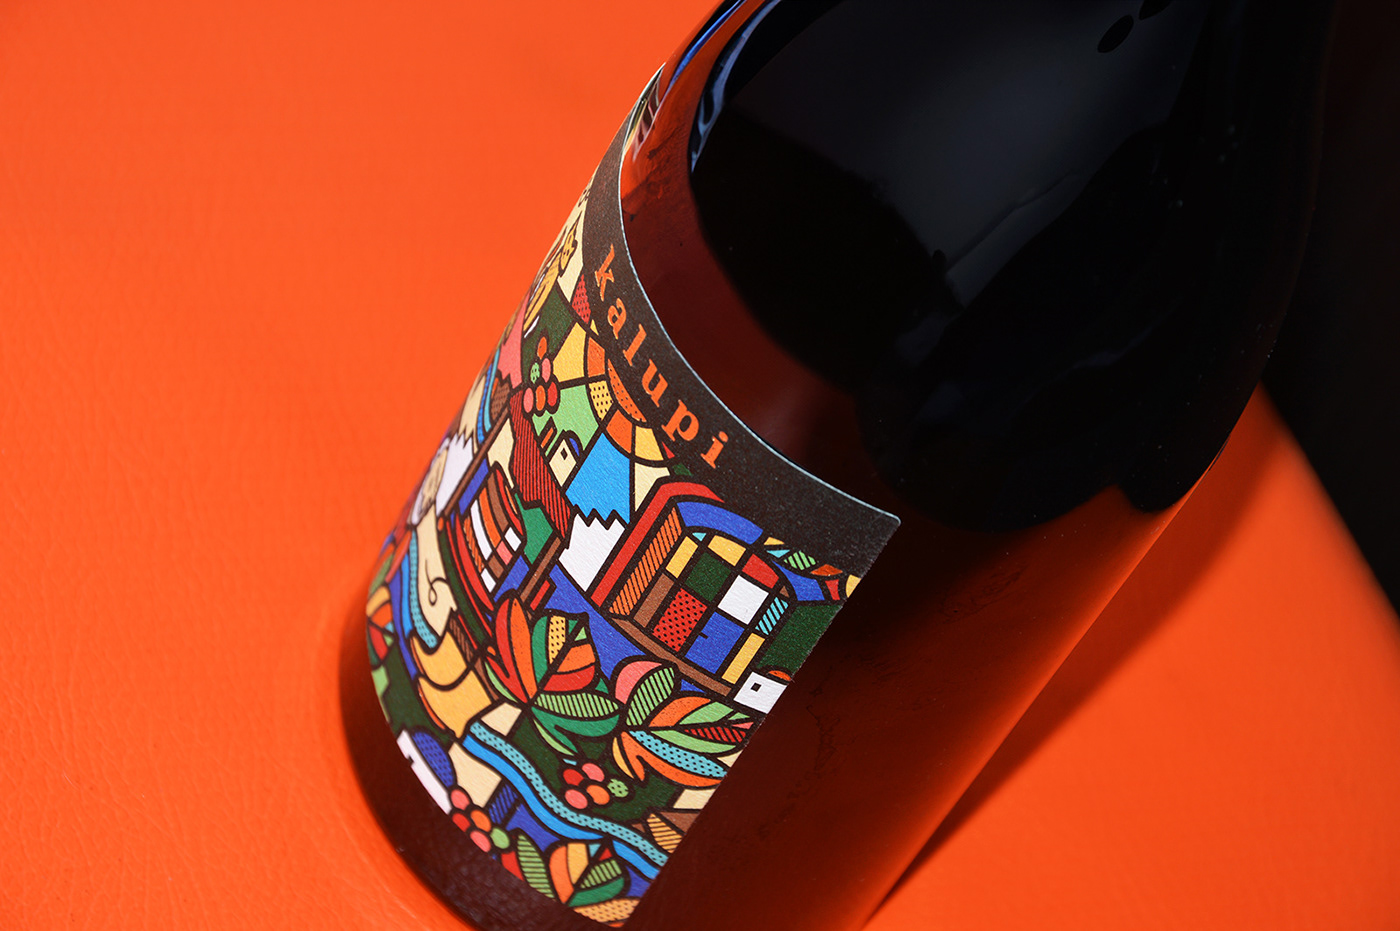 santorini Greece wine limited edition Pop Art stained glass bottle geometric mike karolos